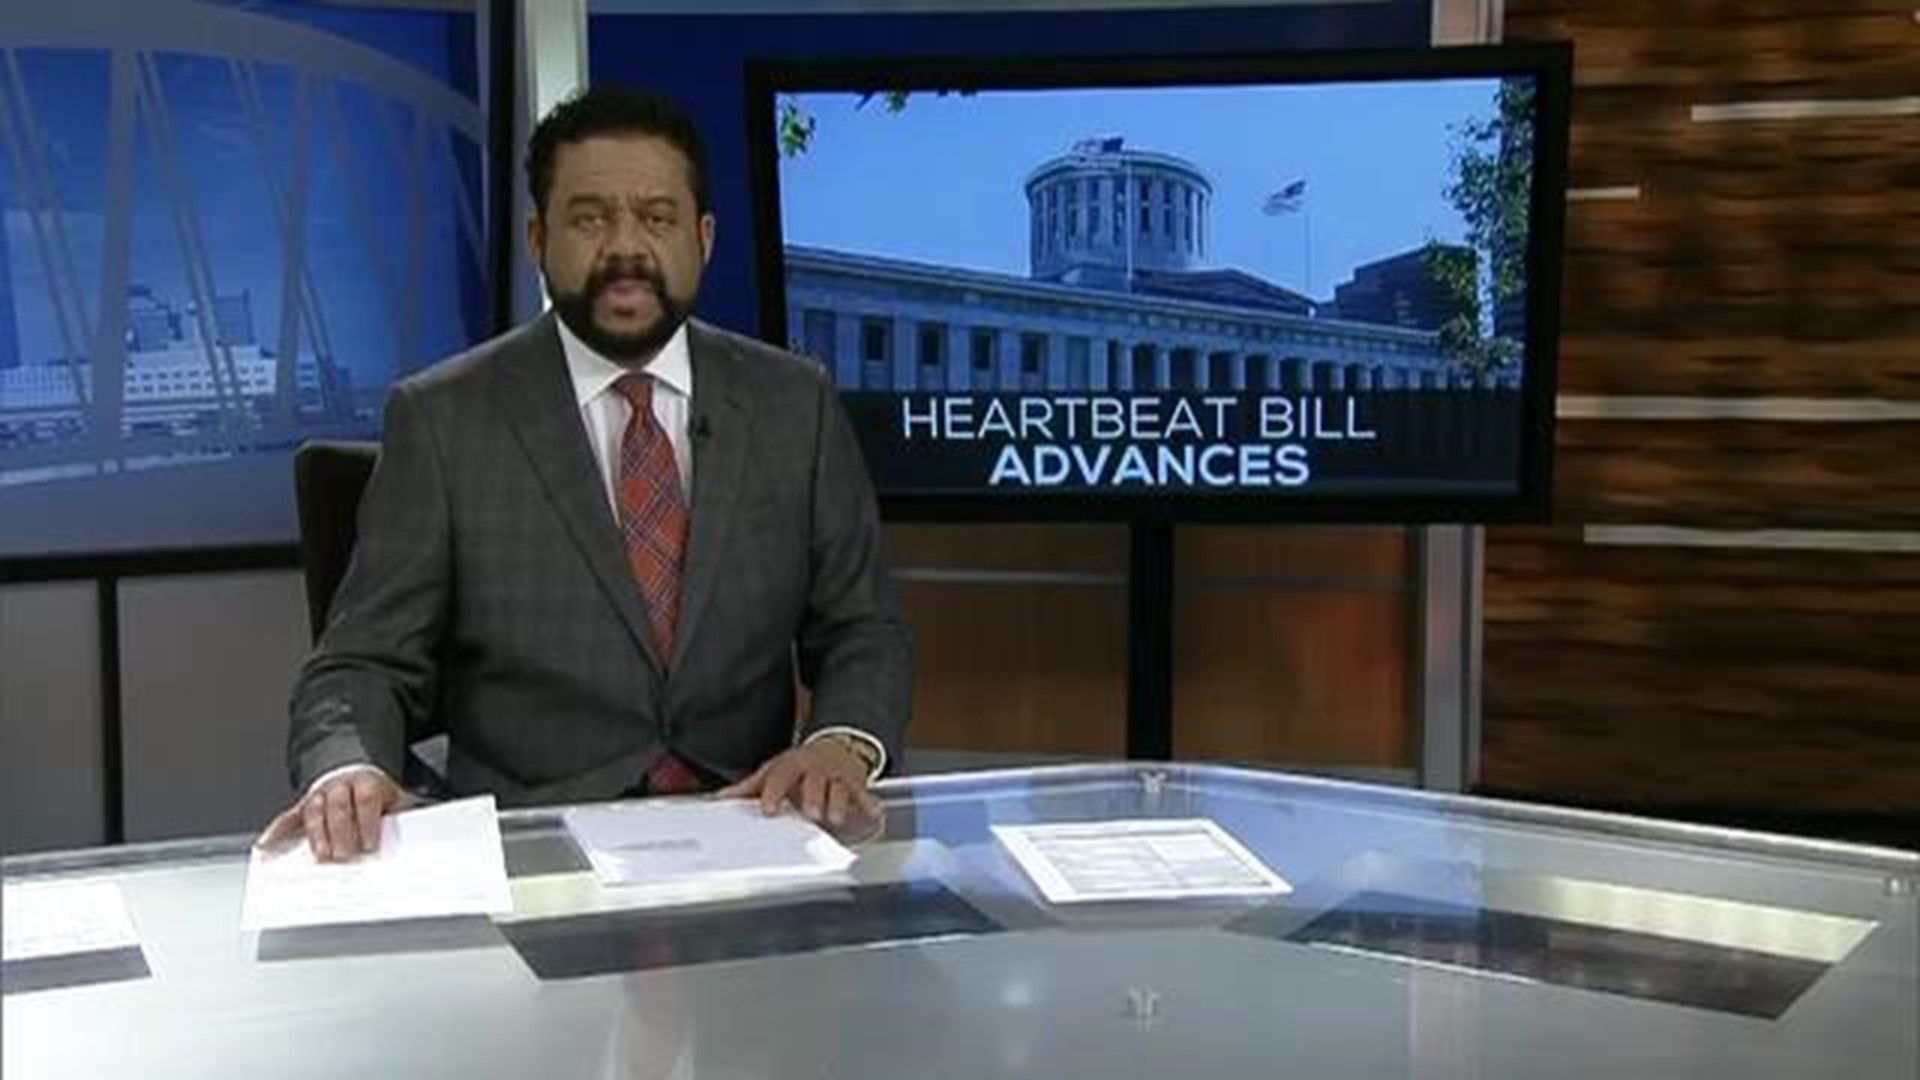 Heartbeat Bill passes through Ohio Senate